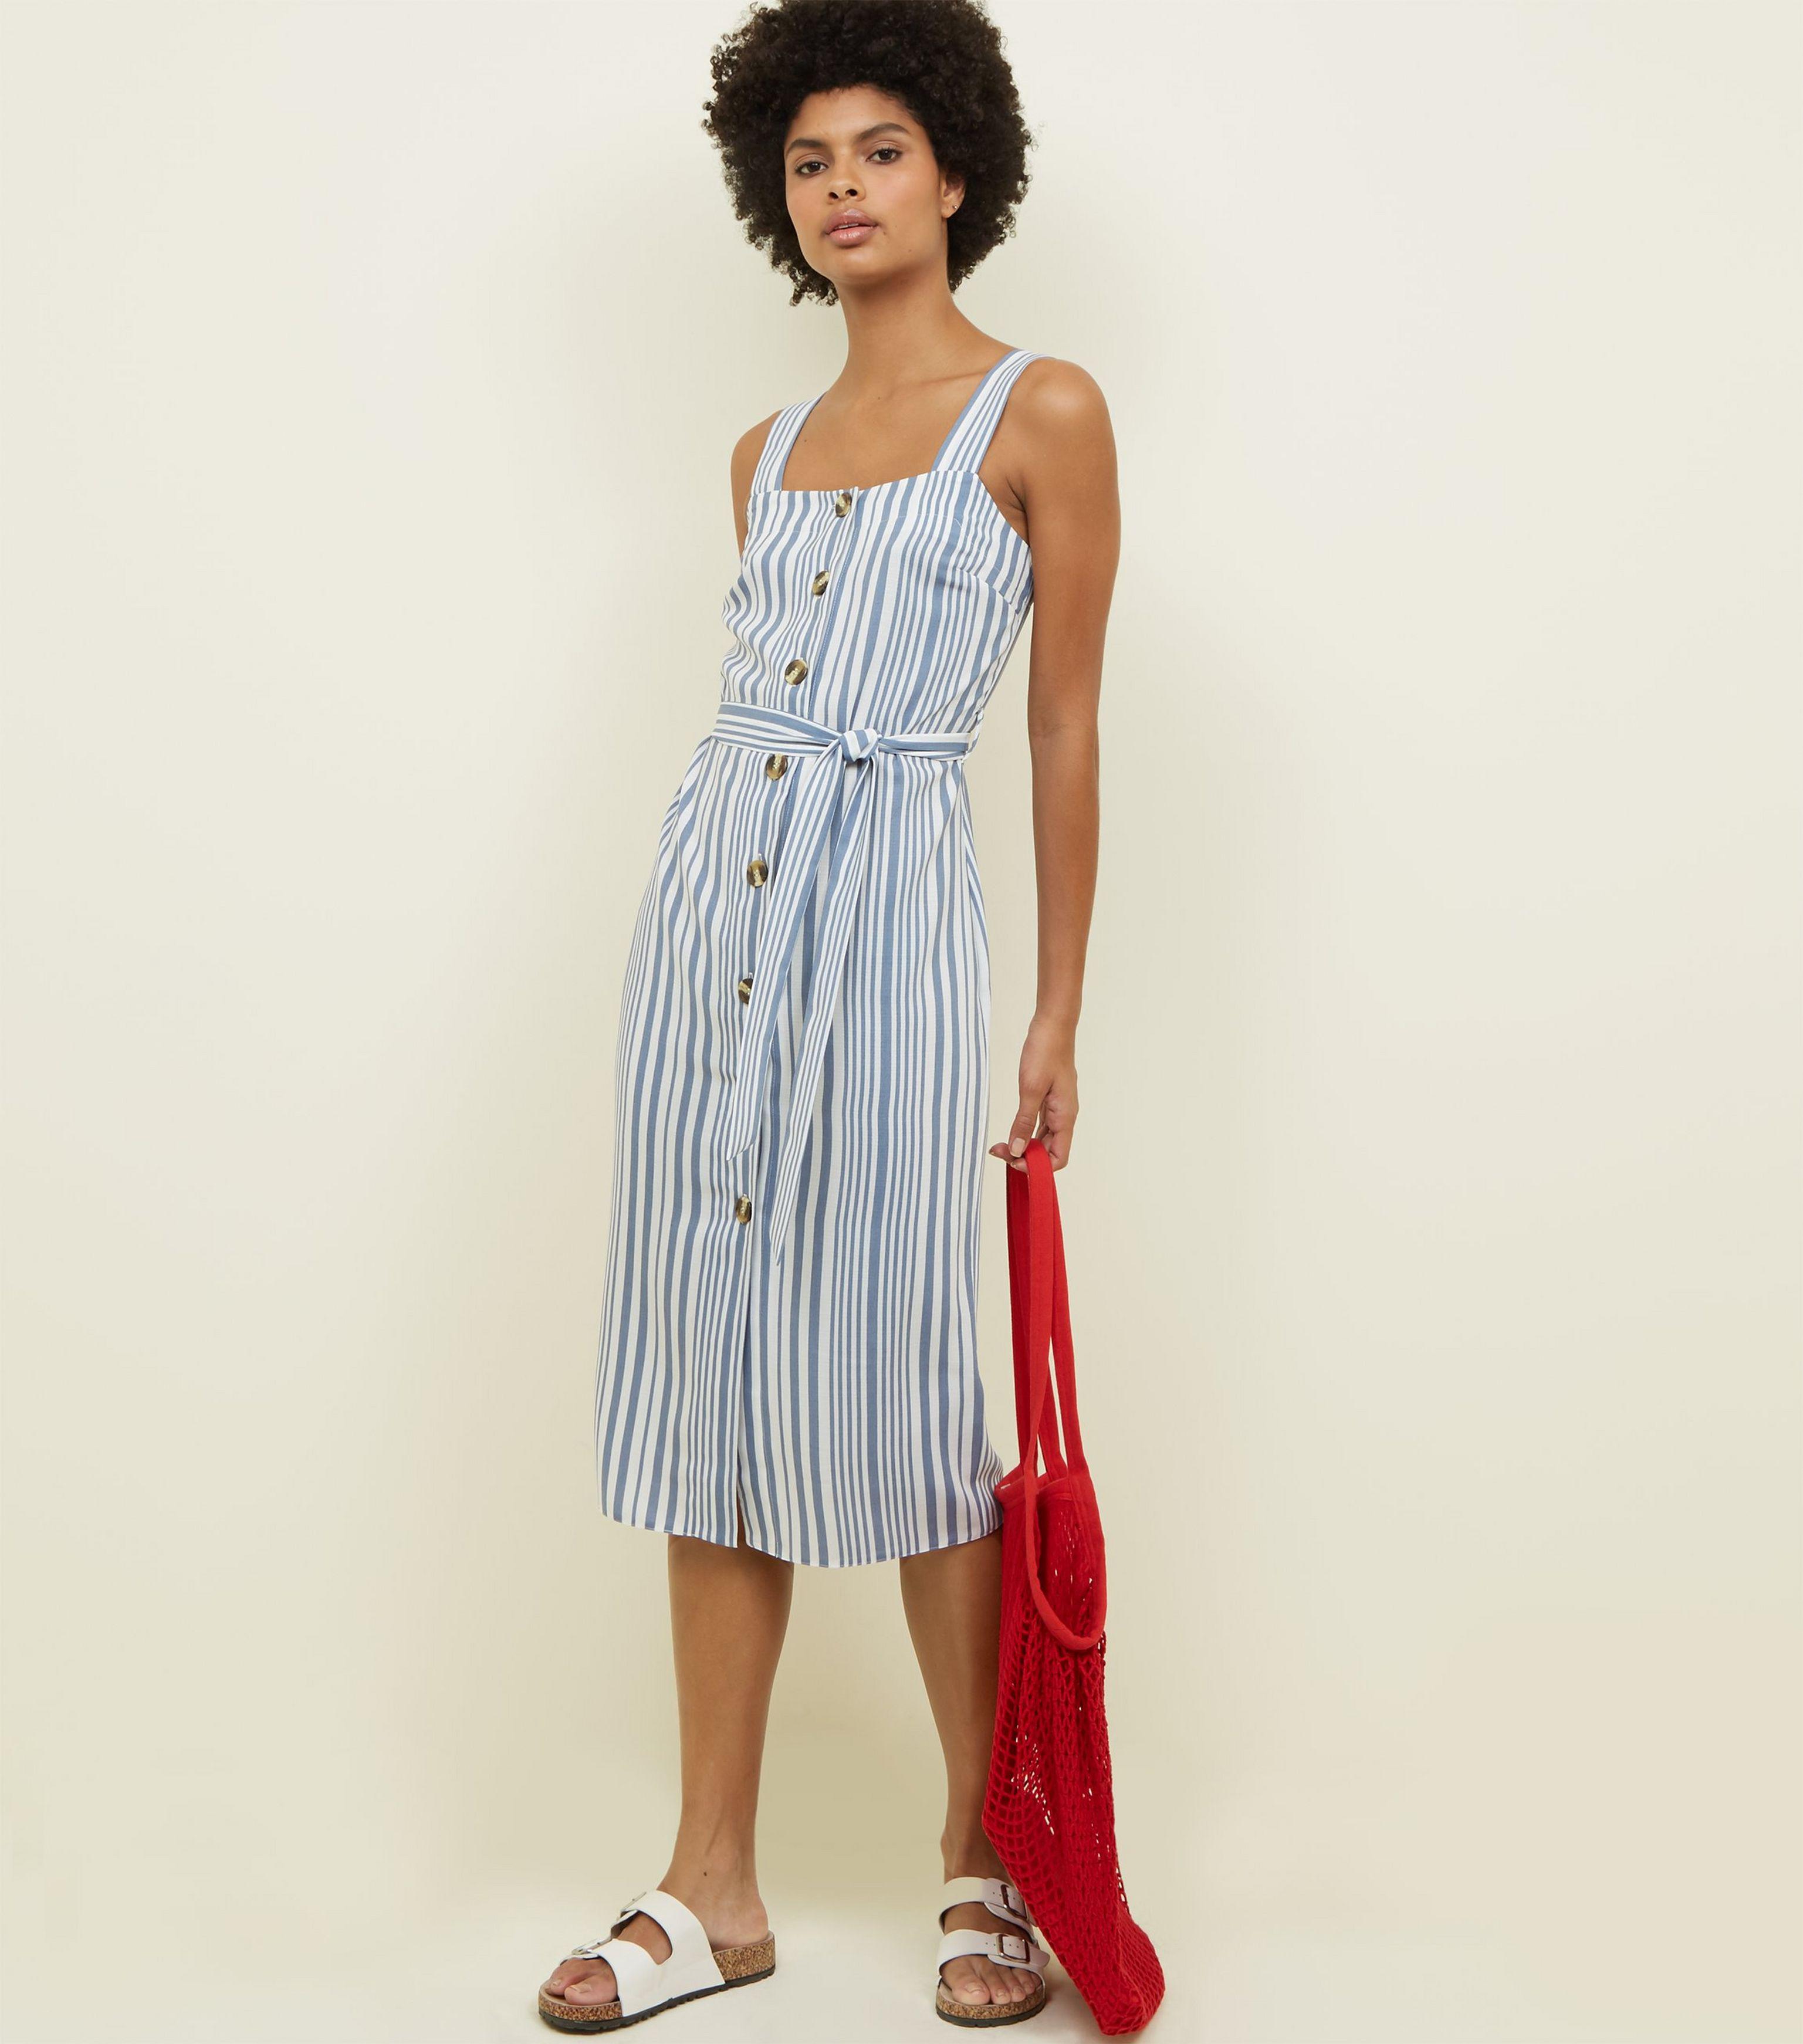 New Look Striped Midi Dress Top Sellers, 55% OFF | espirituviajero.com